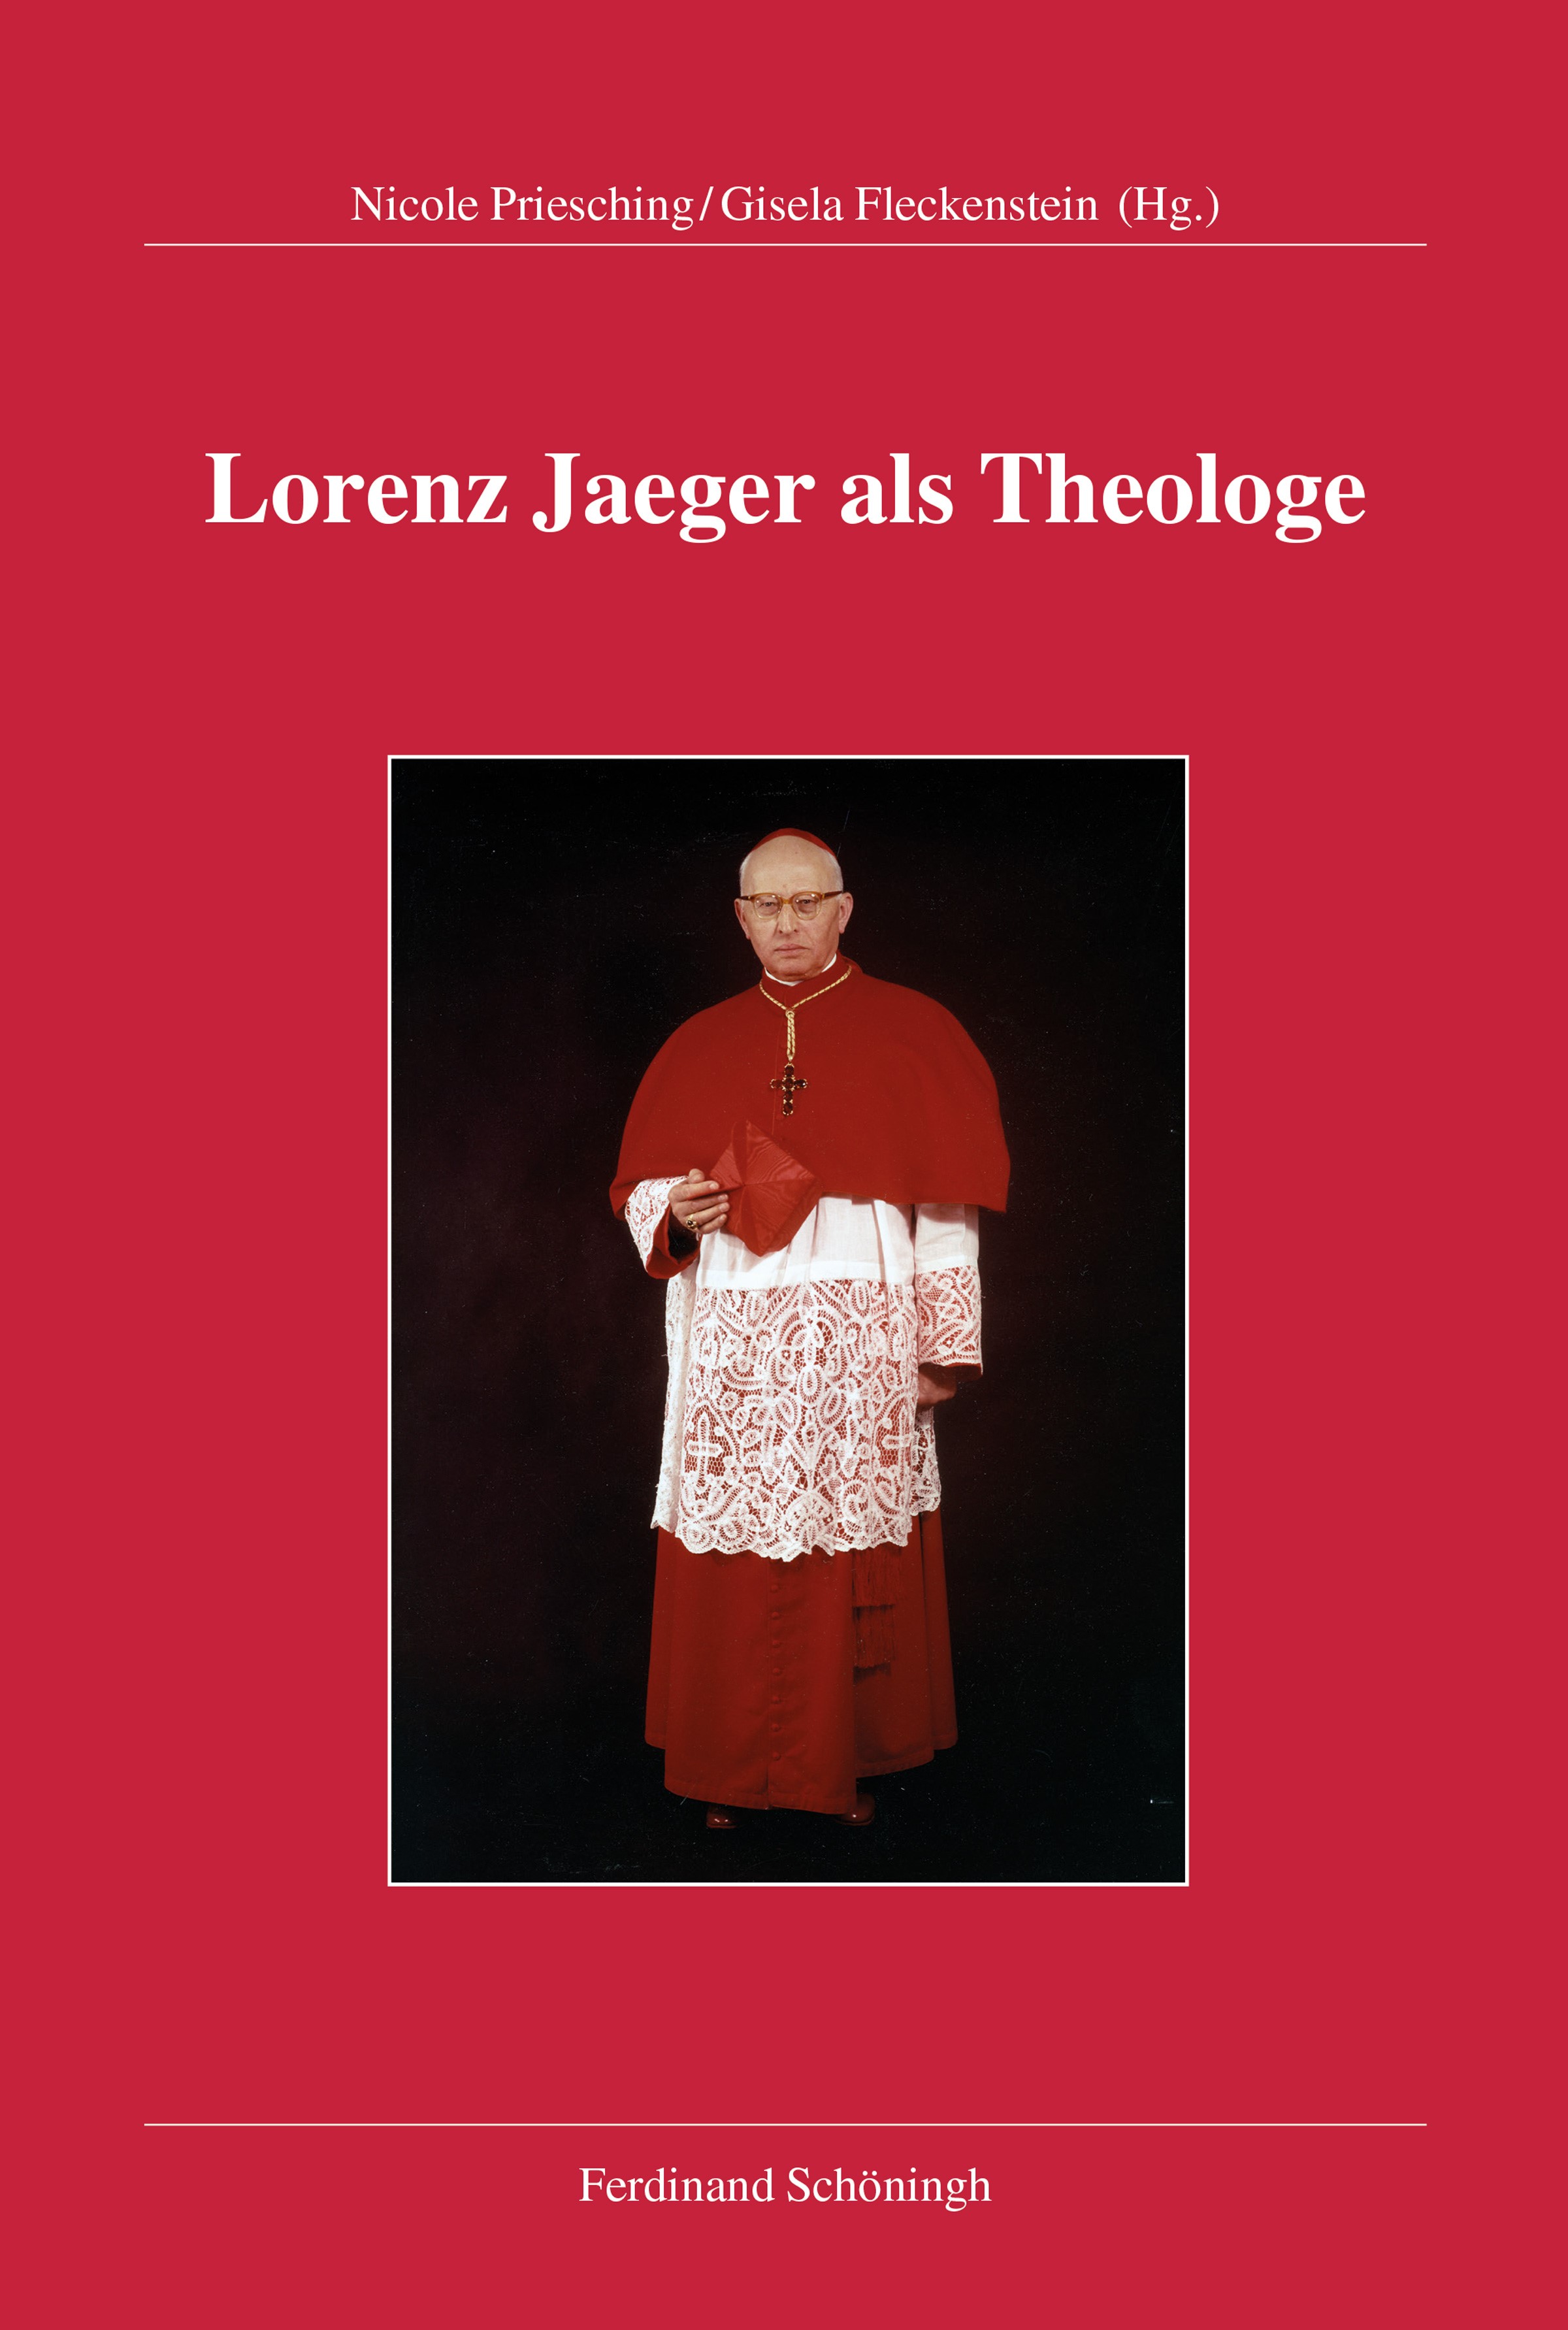 Nicole Priesching / Gisela Fleckenstein (Hrsg.): Lorenz Jaeger als Theologe (Lorenz Jaeger als Theologe, Bd. 1), Paderborn 2019.